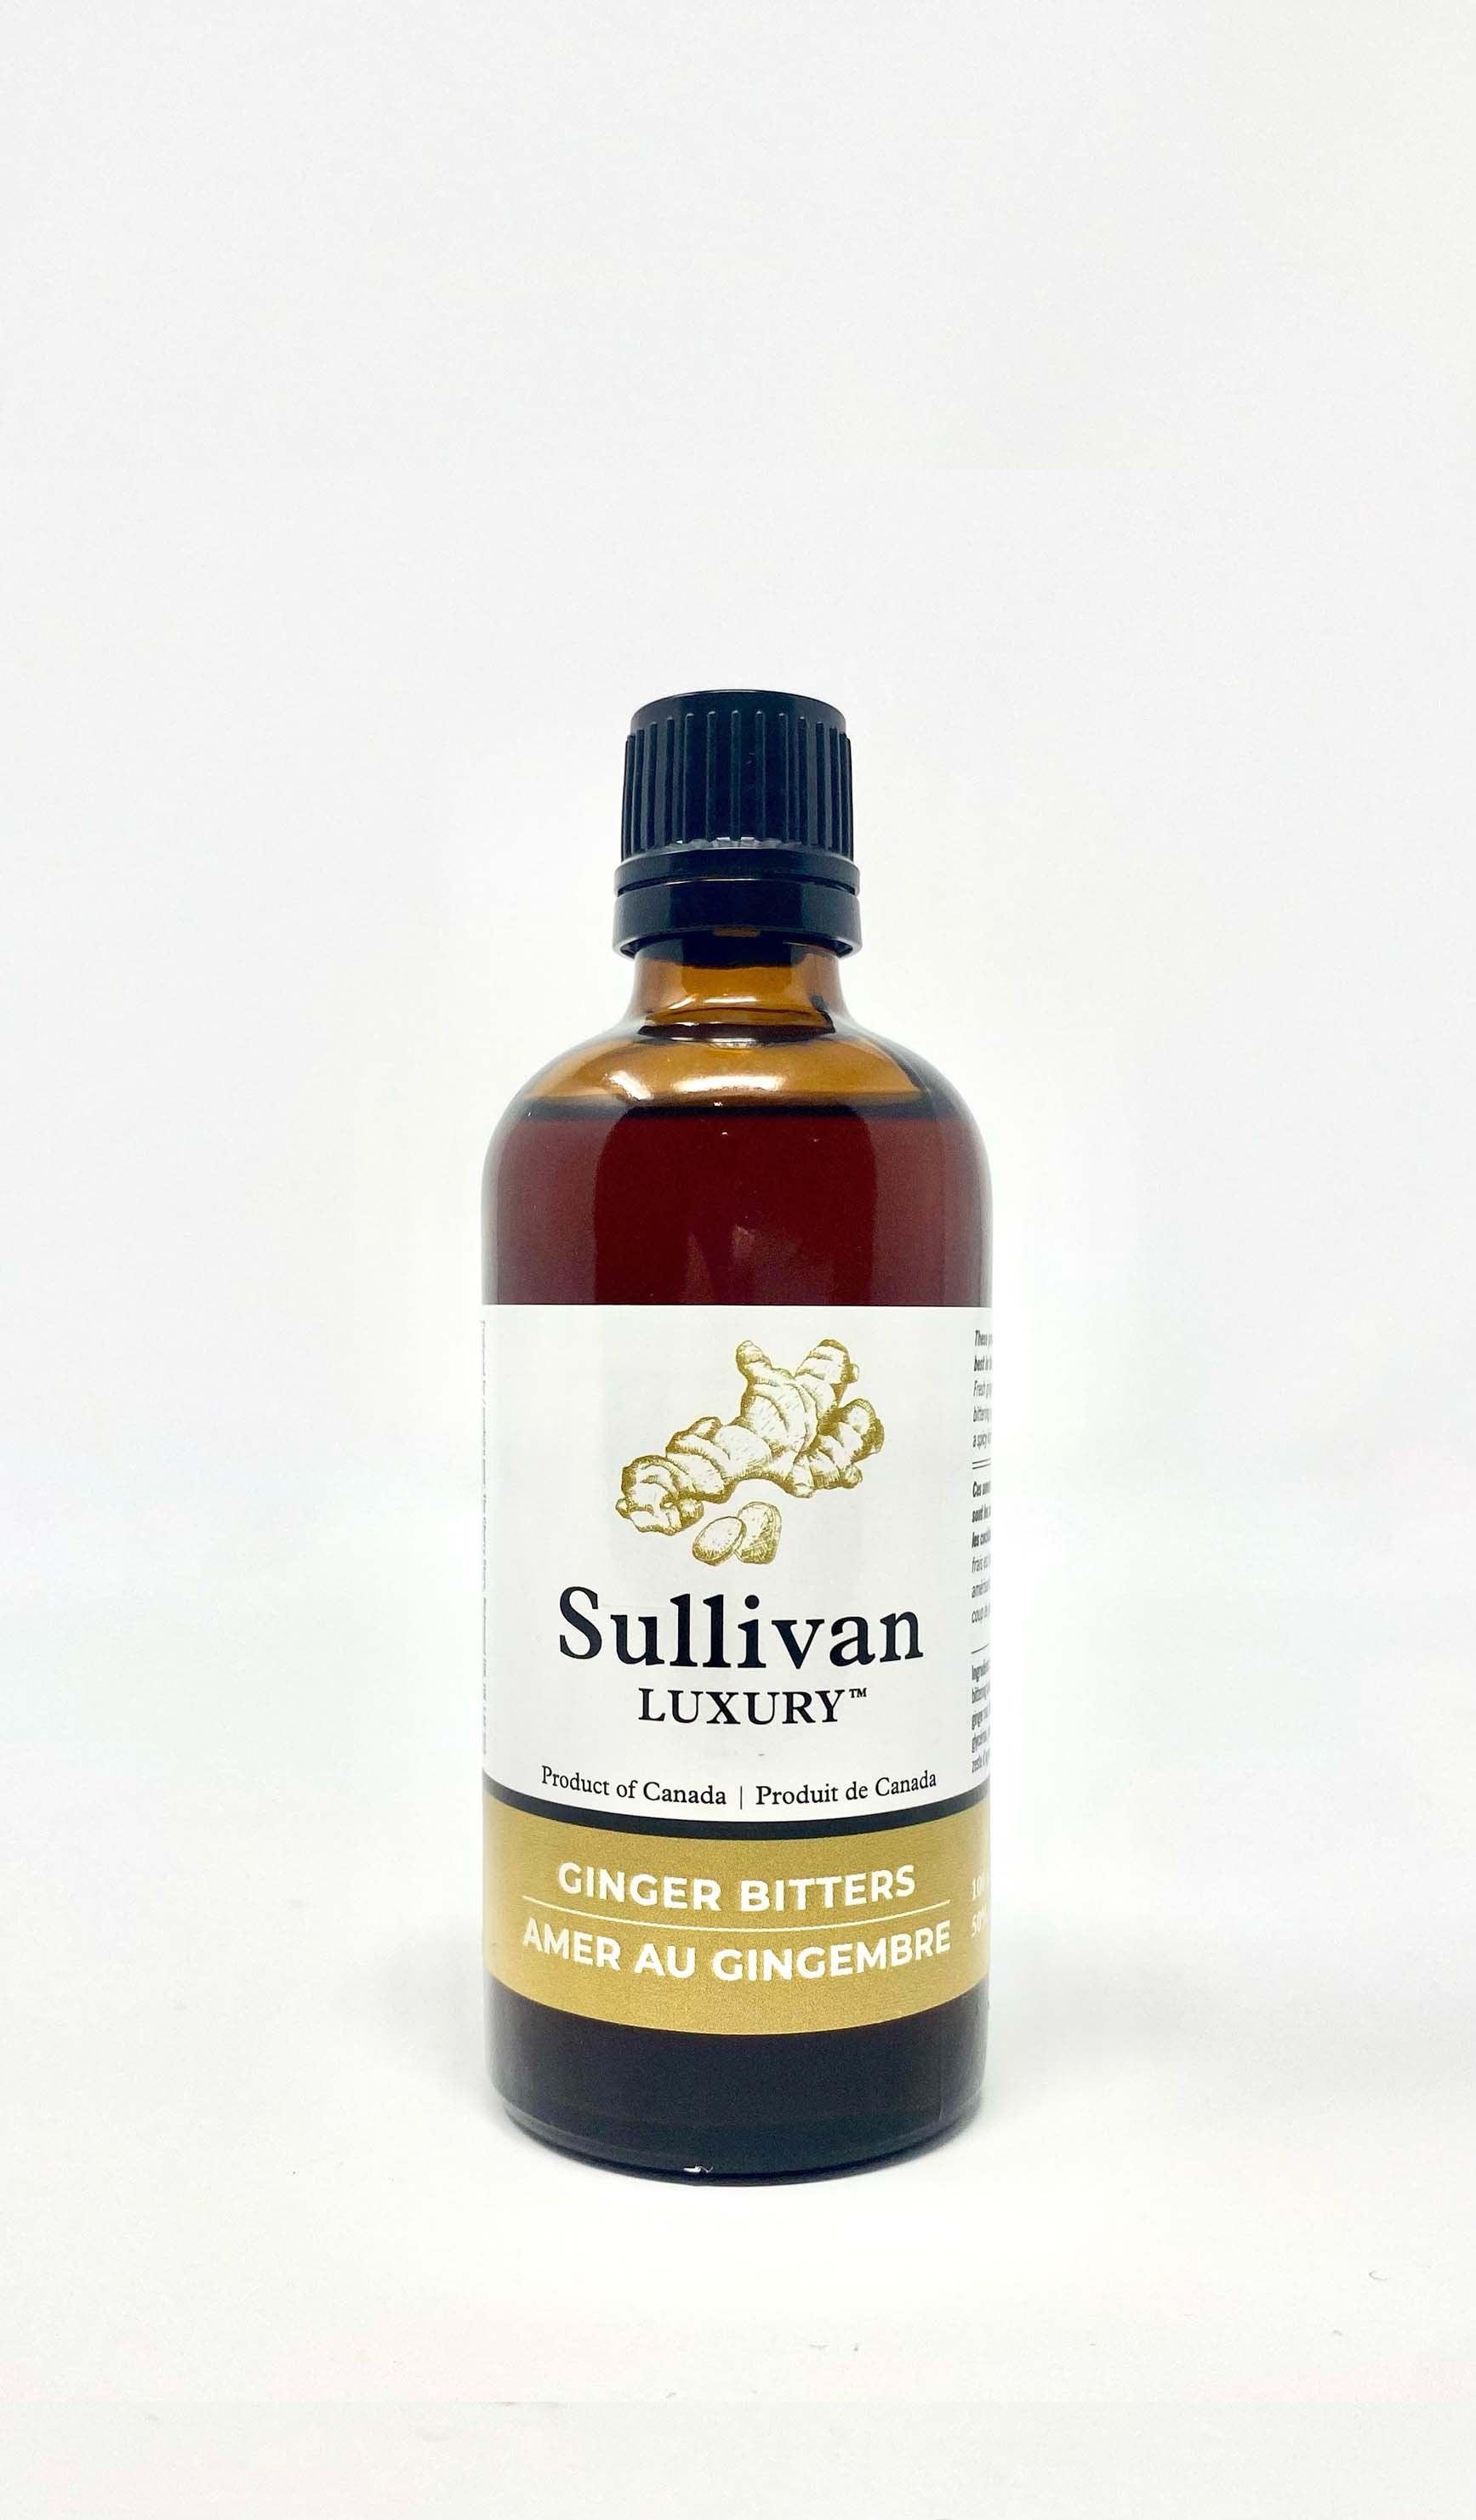 Sullivan Luxury Ginger Bitters - Image #1